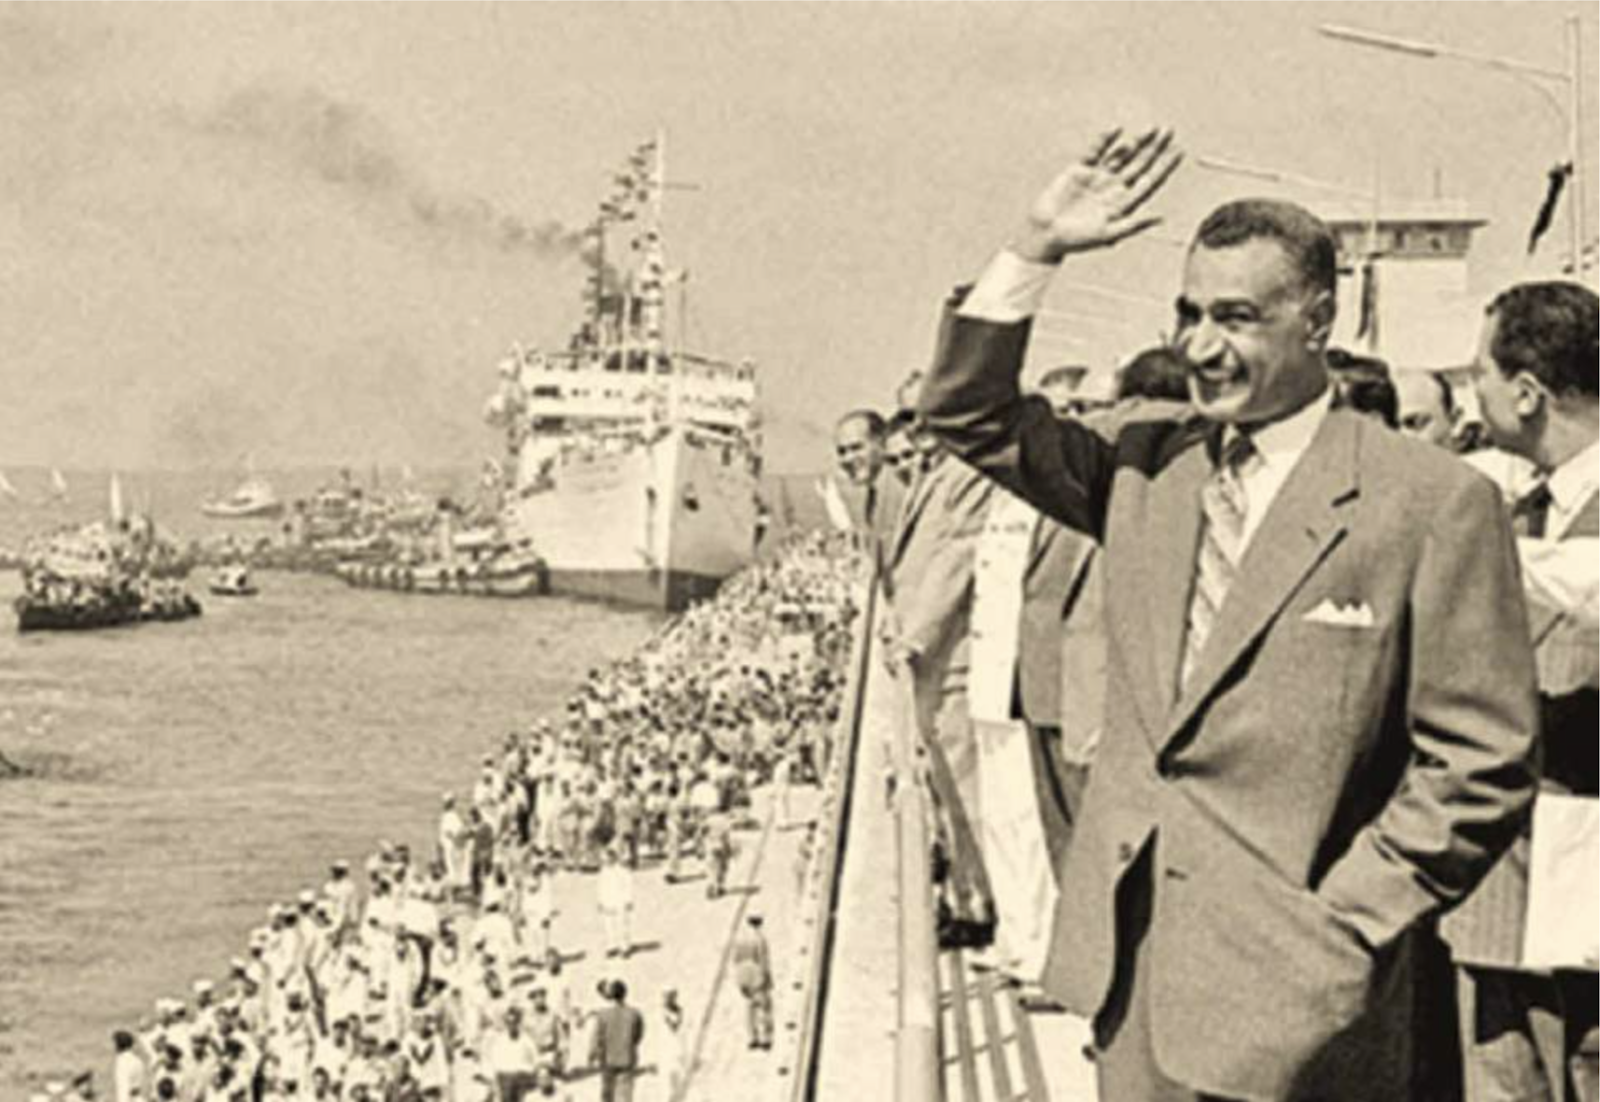 Июль 1956 год. Суэцкий канал 1956. Суэцкий кризис 1956. Египет национализировал Суэцкий канал.